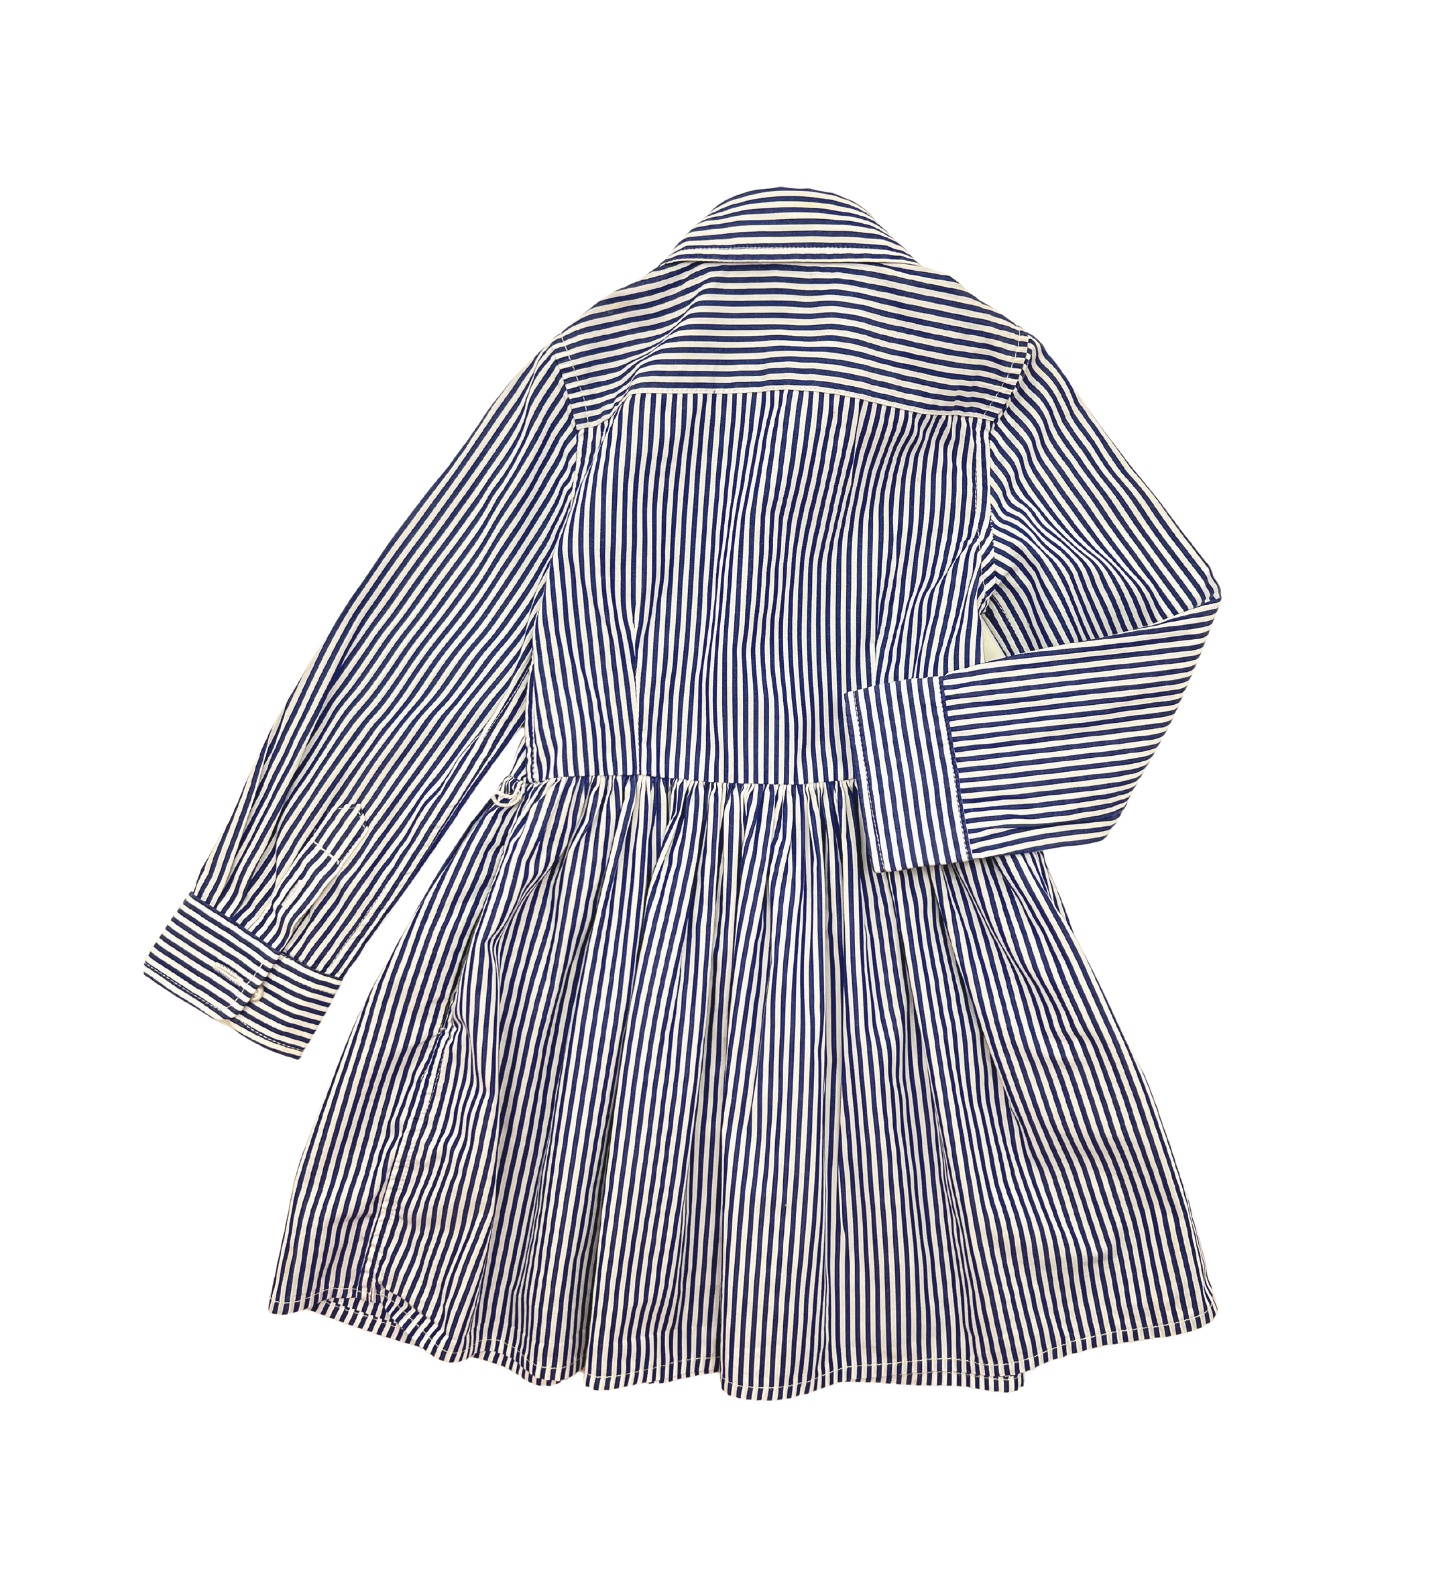 RALPH LAUREN - Striped dress - 3 years old